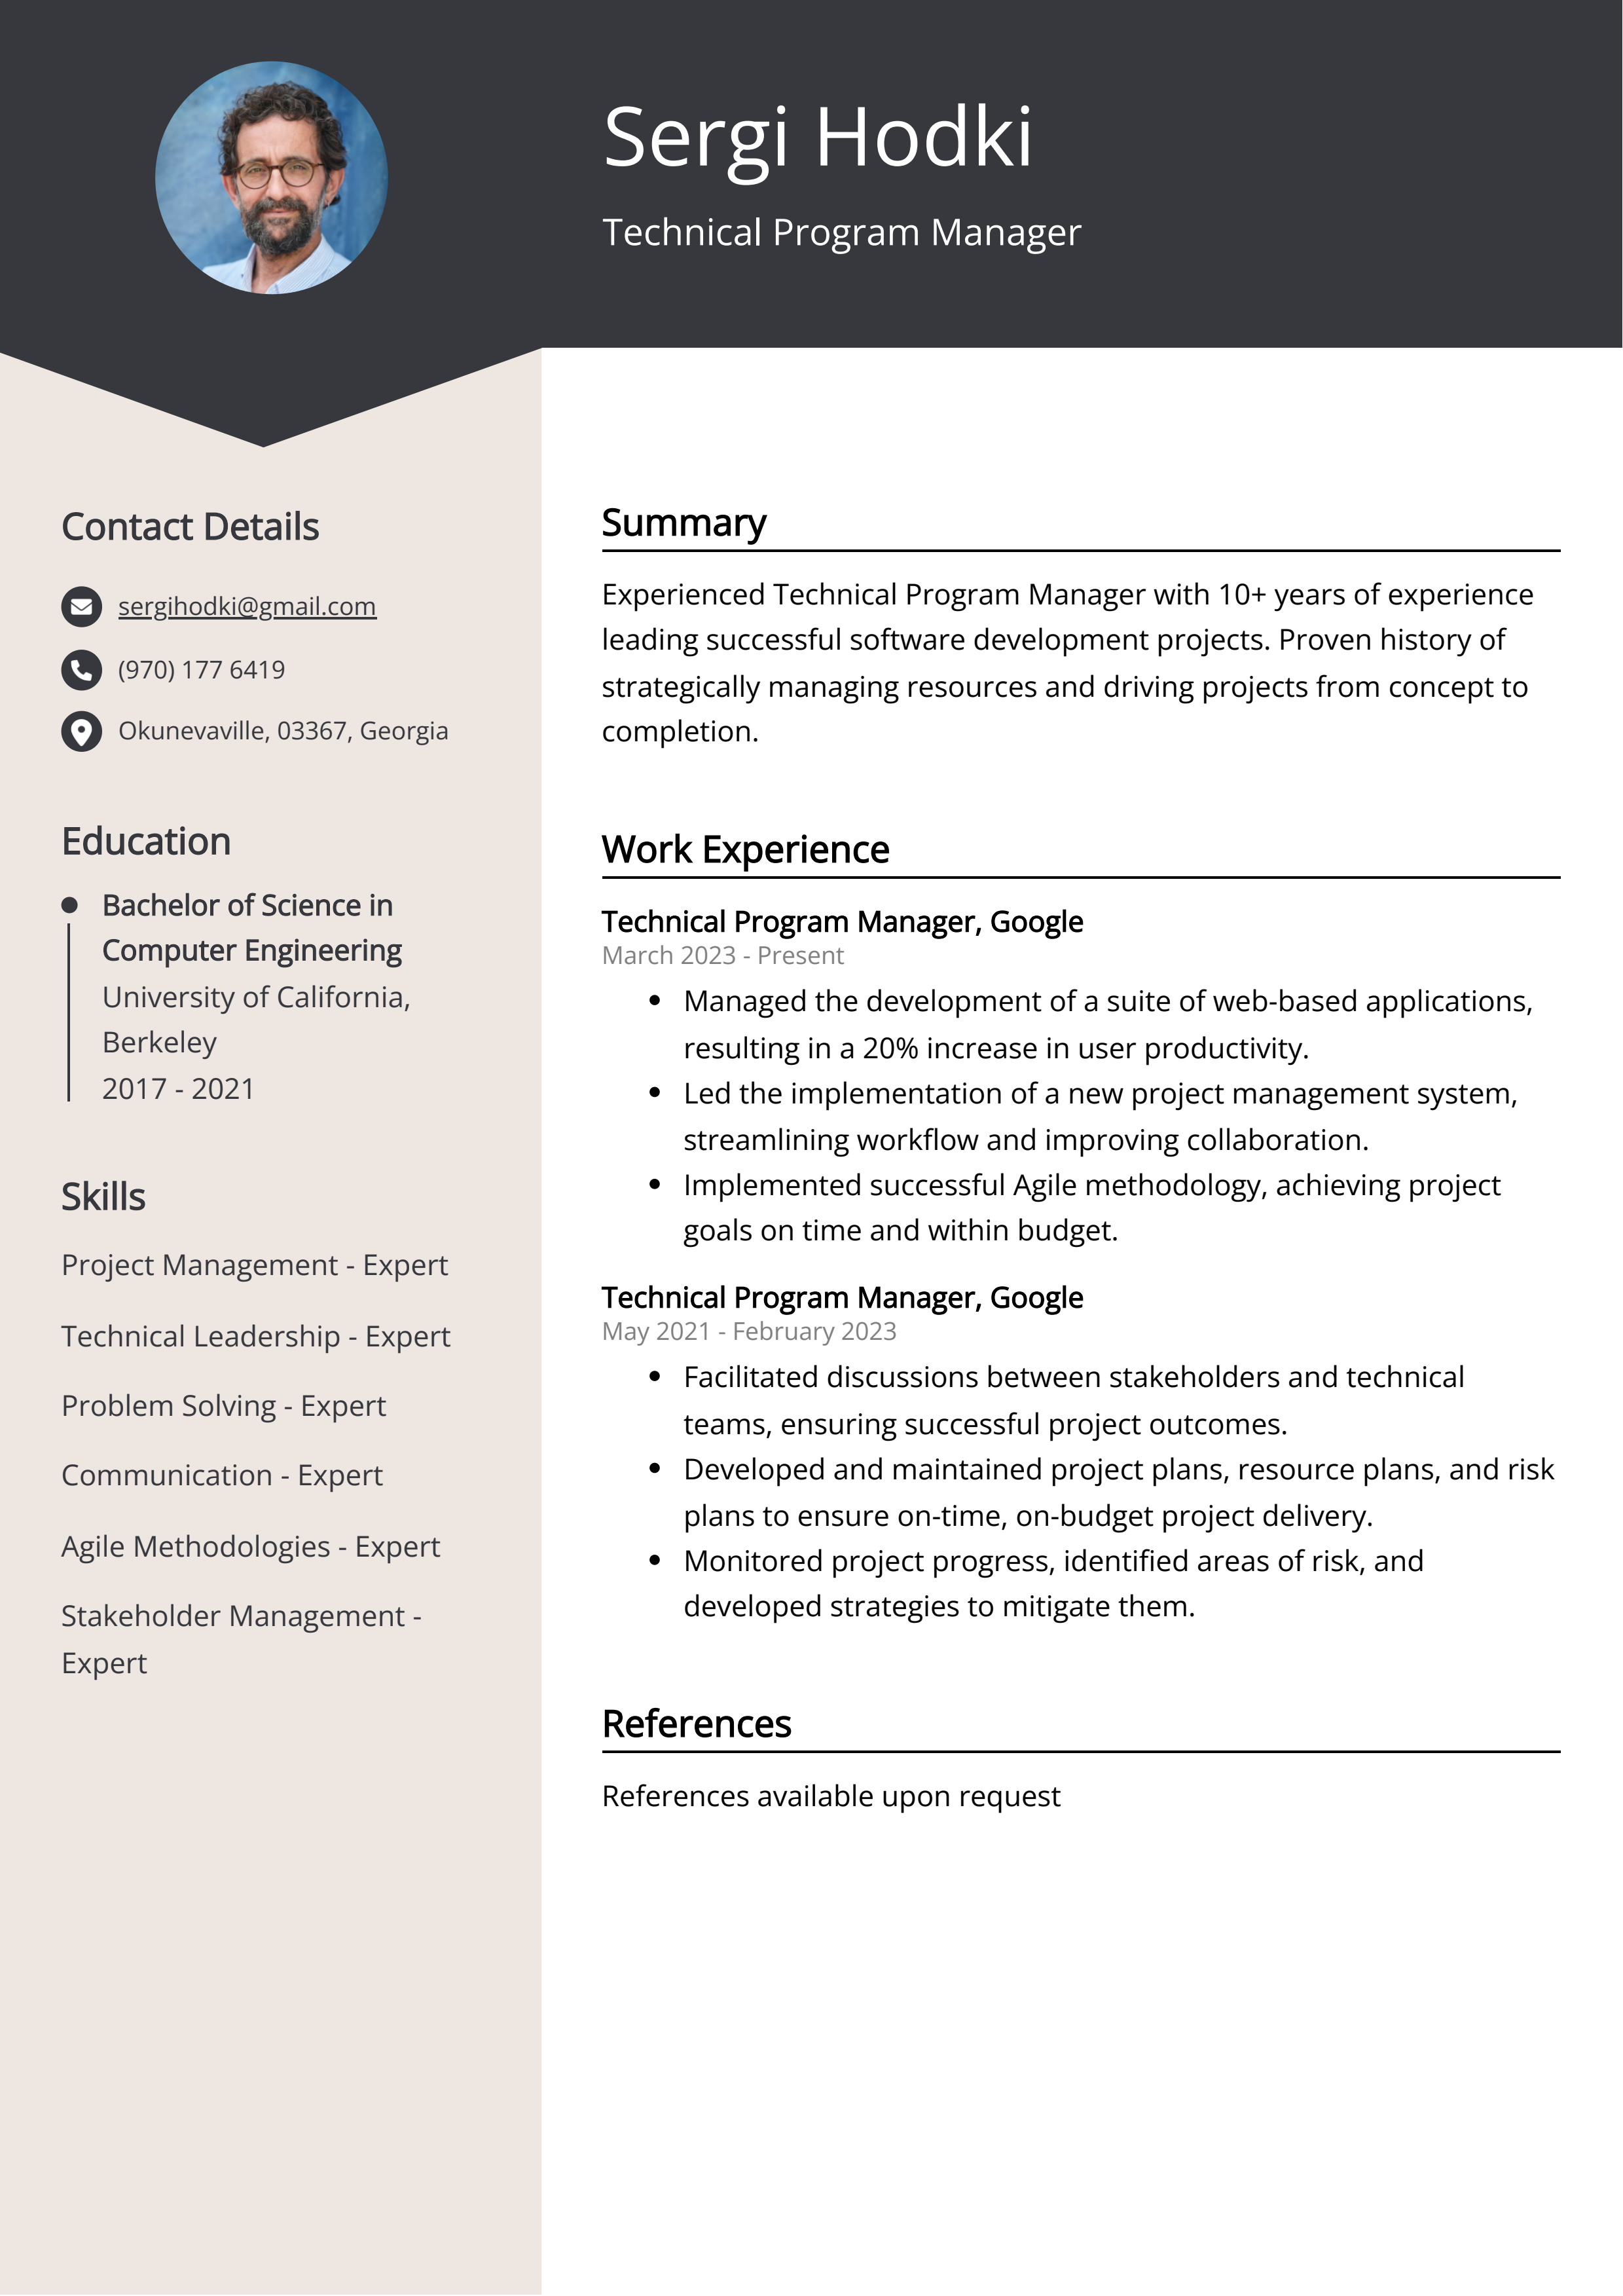 Technical Program Manager CV Example